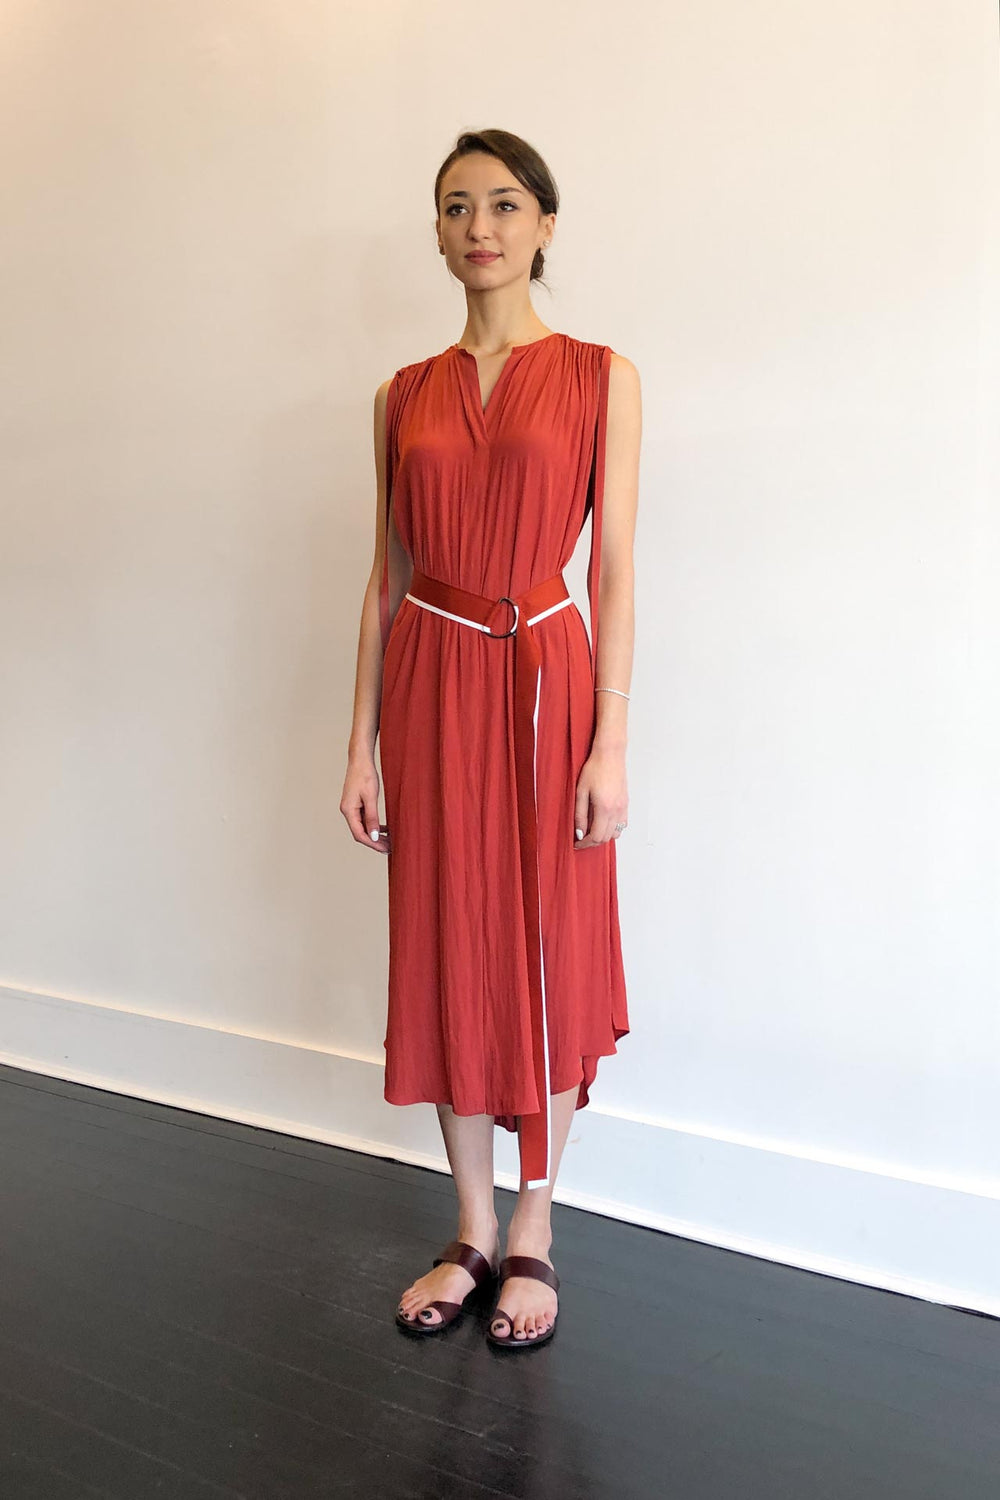 Fashion Designer CARL KAPP collection | Patatran Onesize Fits All cocktail dress Orange | Sydney Australia